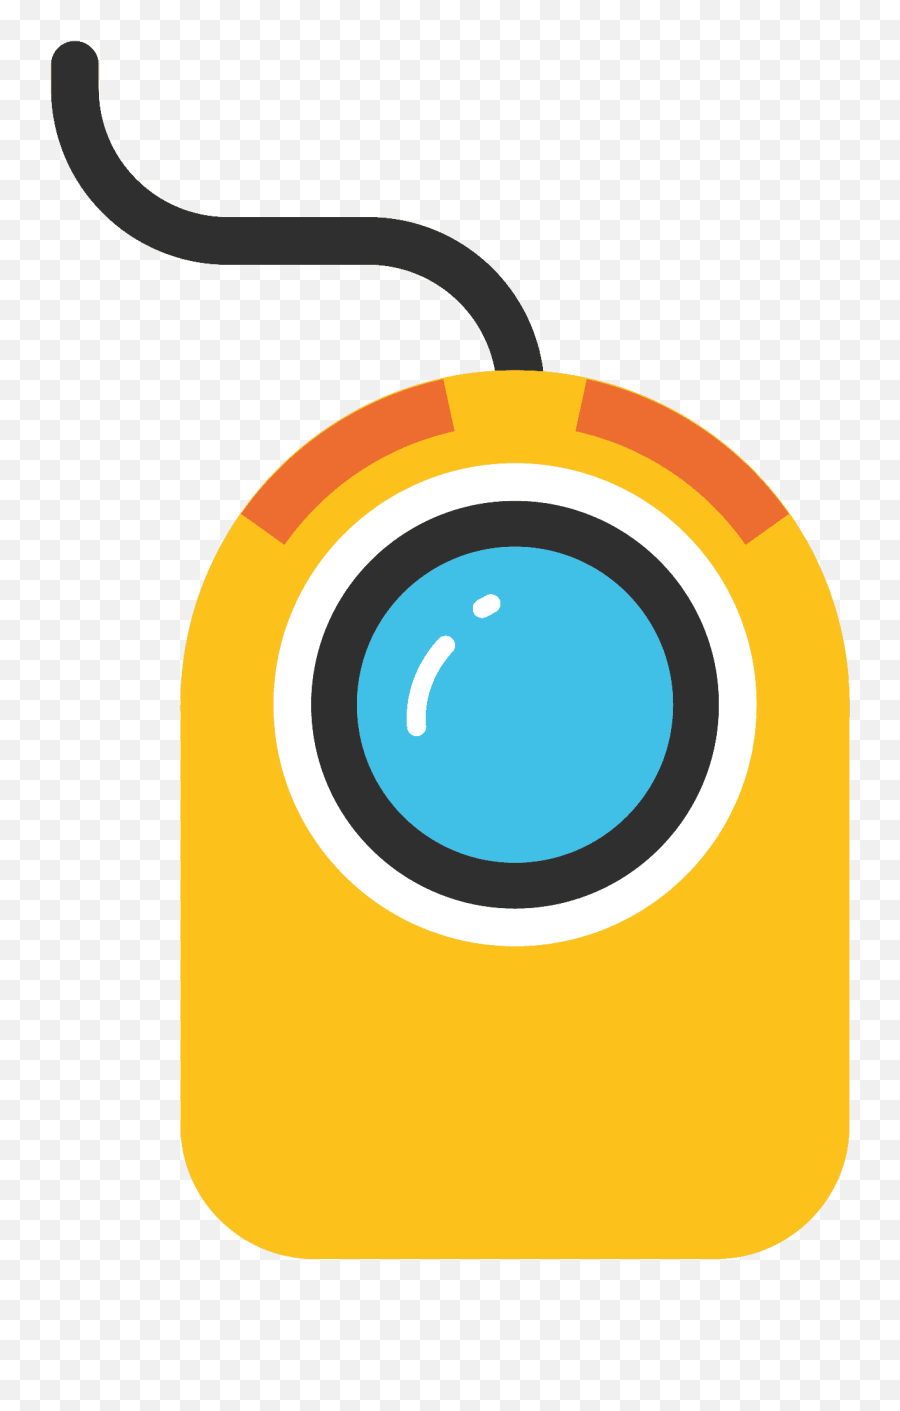 Trackball Emoji - Vertical,What Does This Emoji Mean